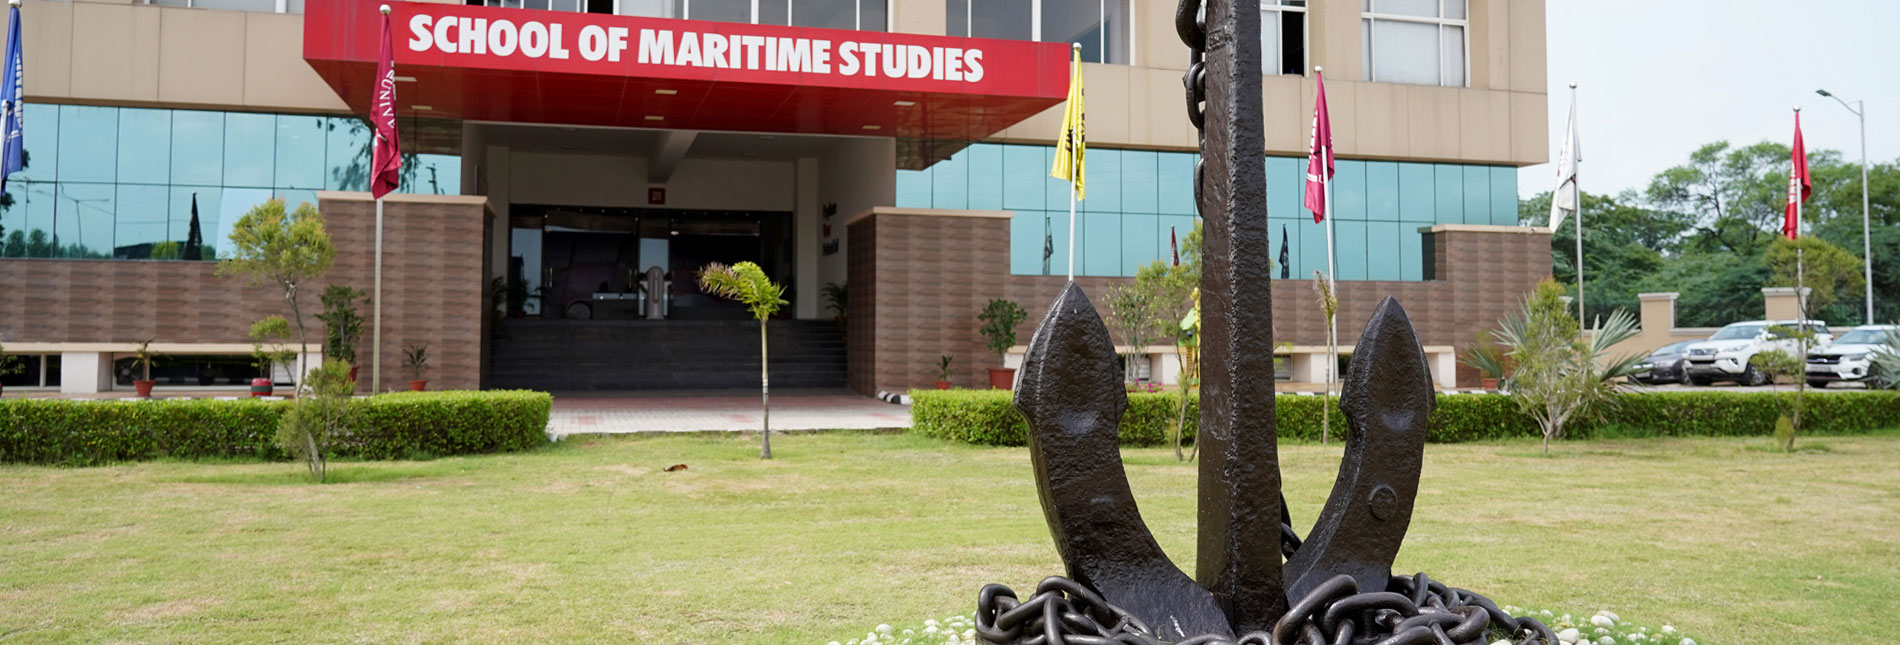 Chitkara University School of Maritime Studies